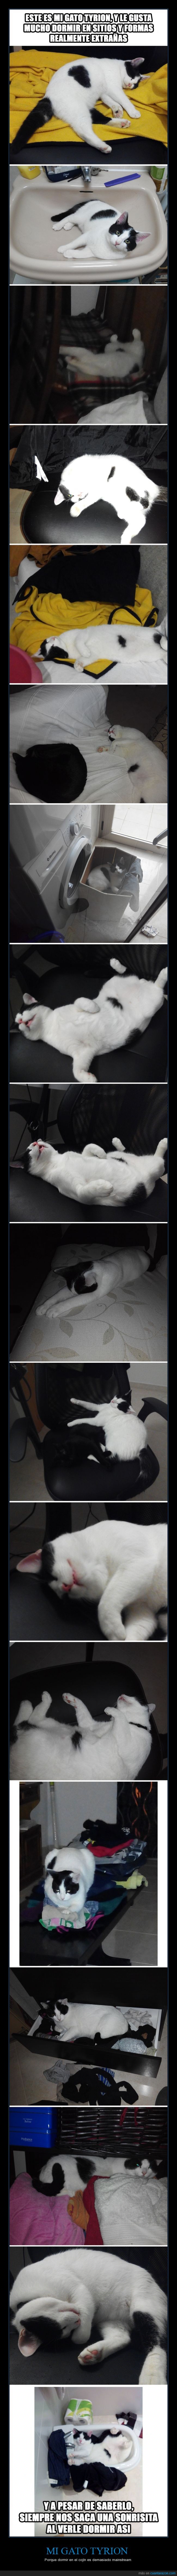 gato,Tyrion,dormir,formas extrañas de dormir